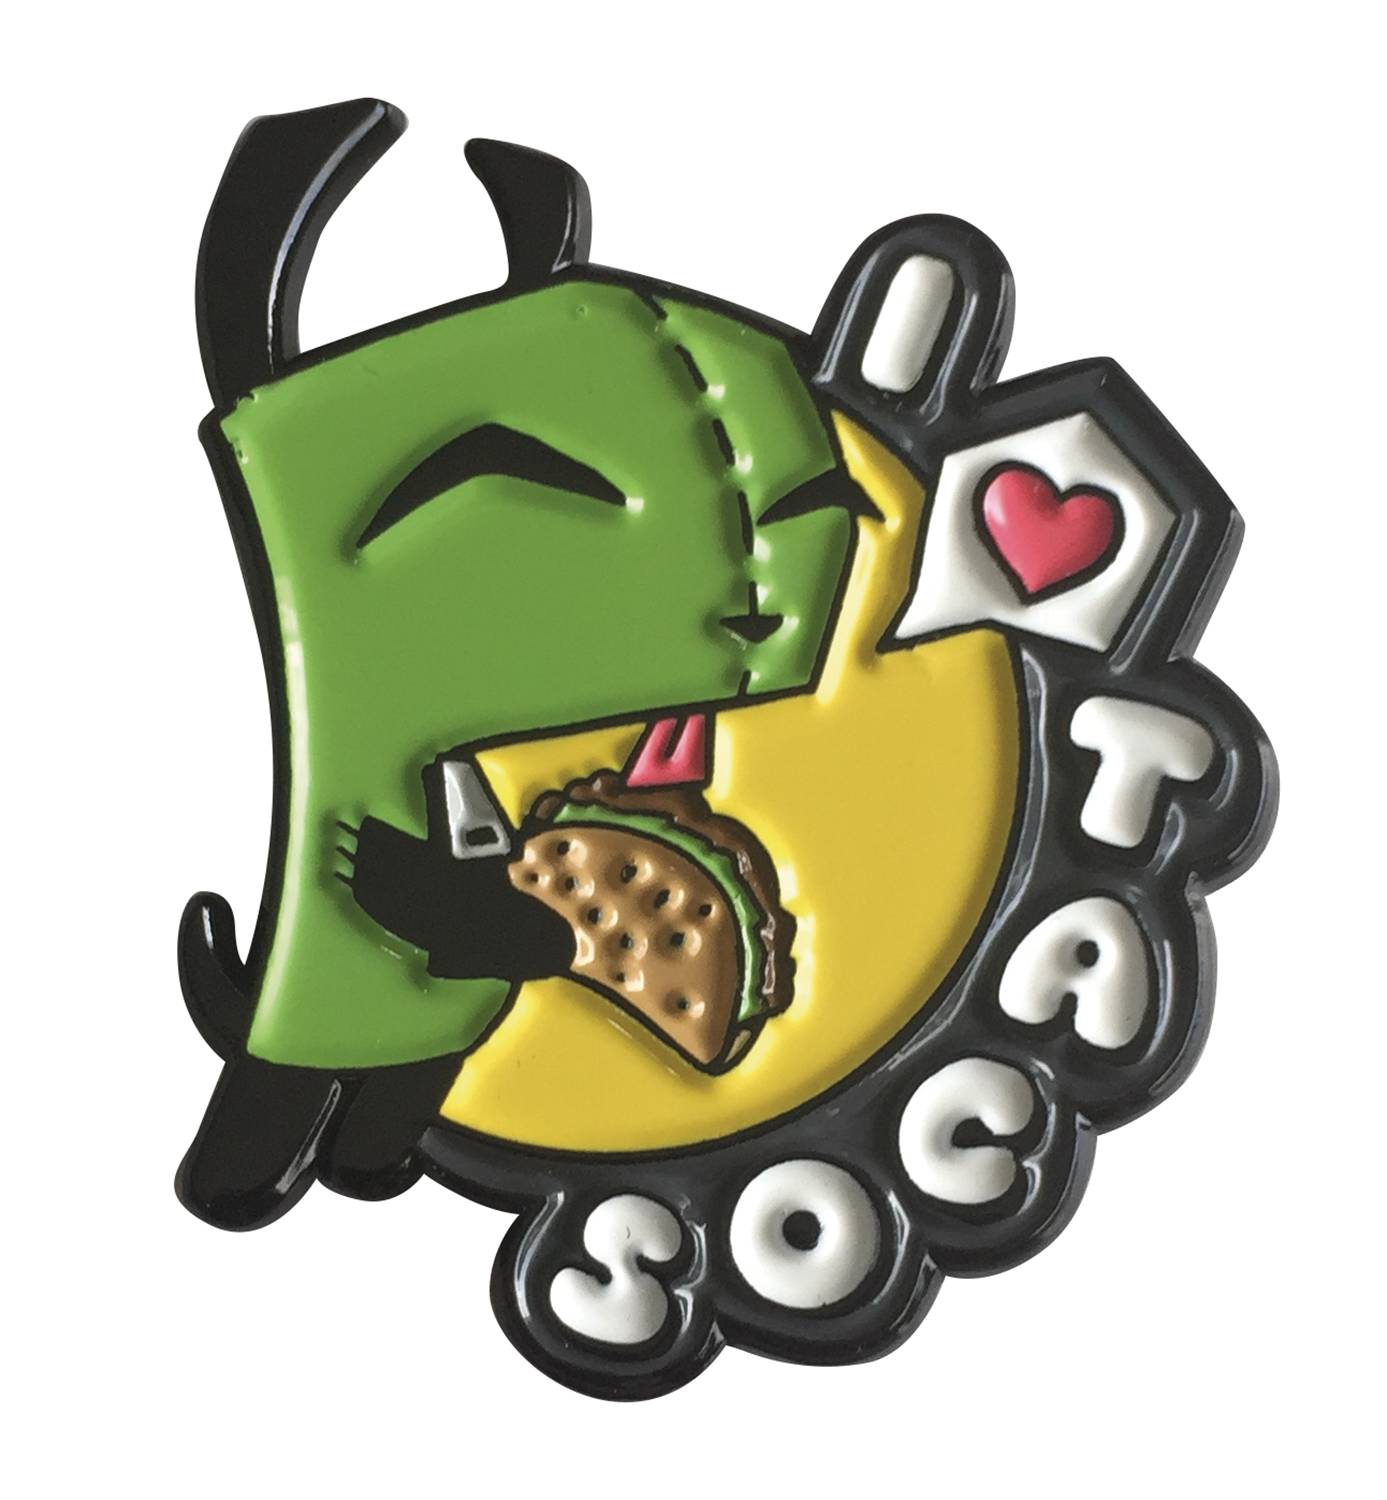 Invader Zim I Love Tacos Lapel Pin